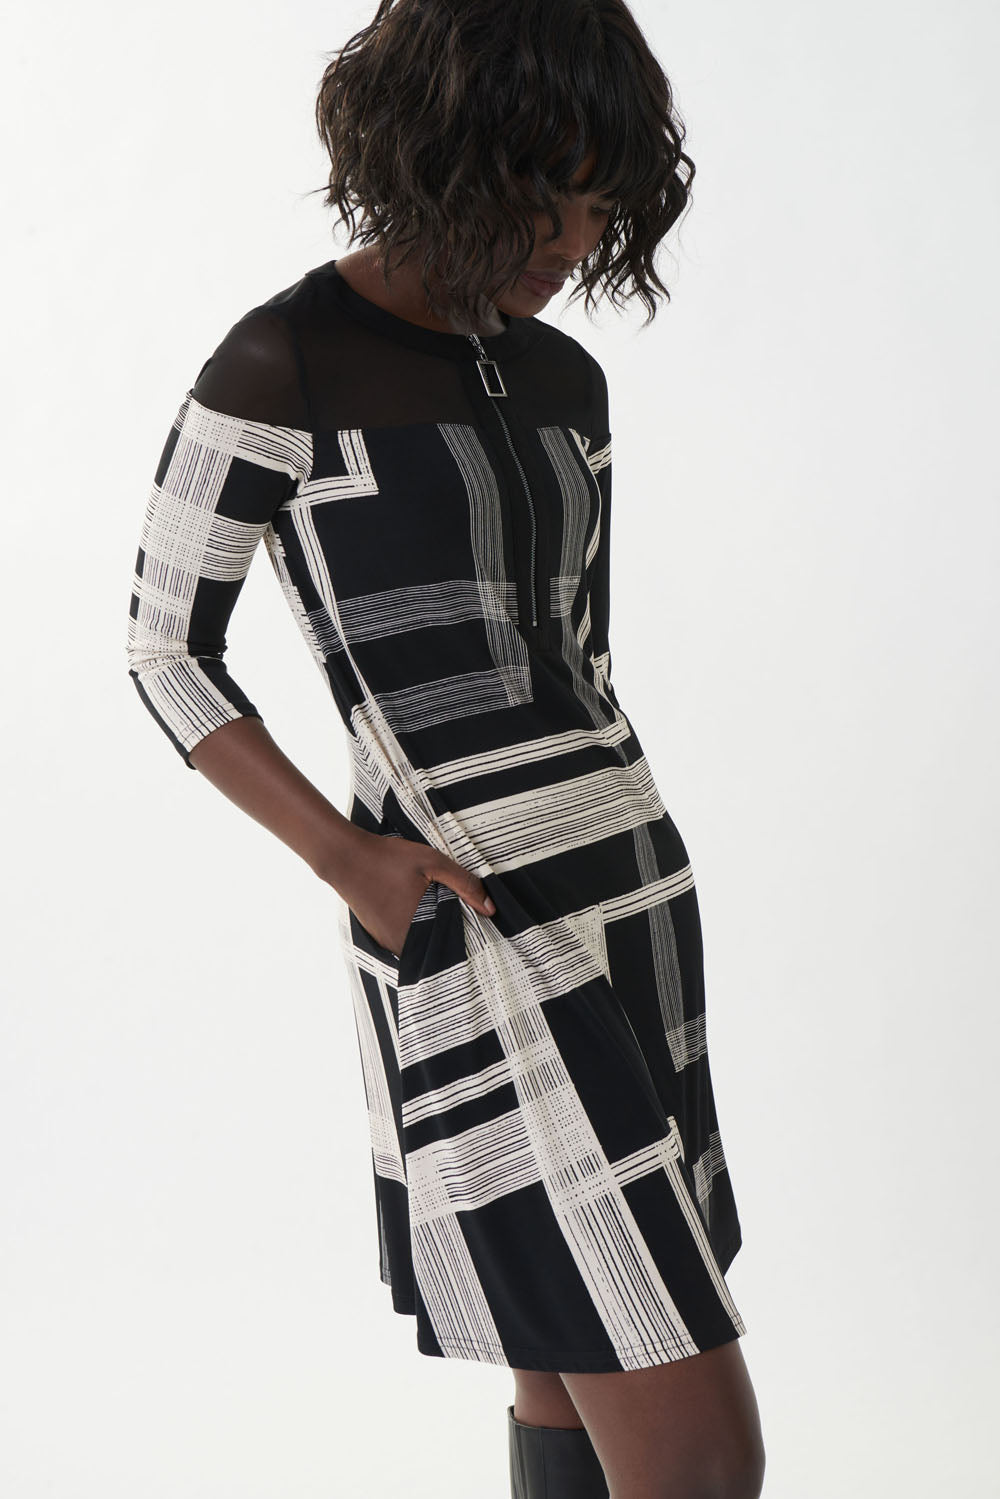 Joseph Ribkoff Black-Beige Sheer A-line Dress Style 223008